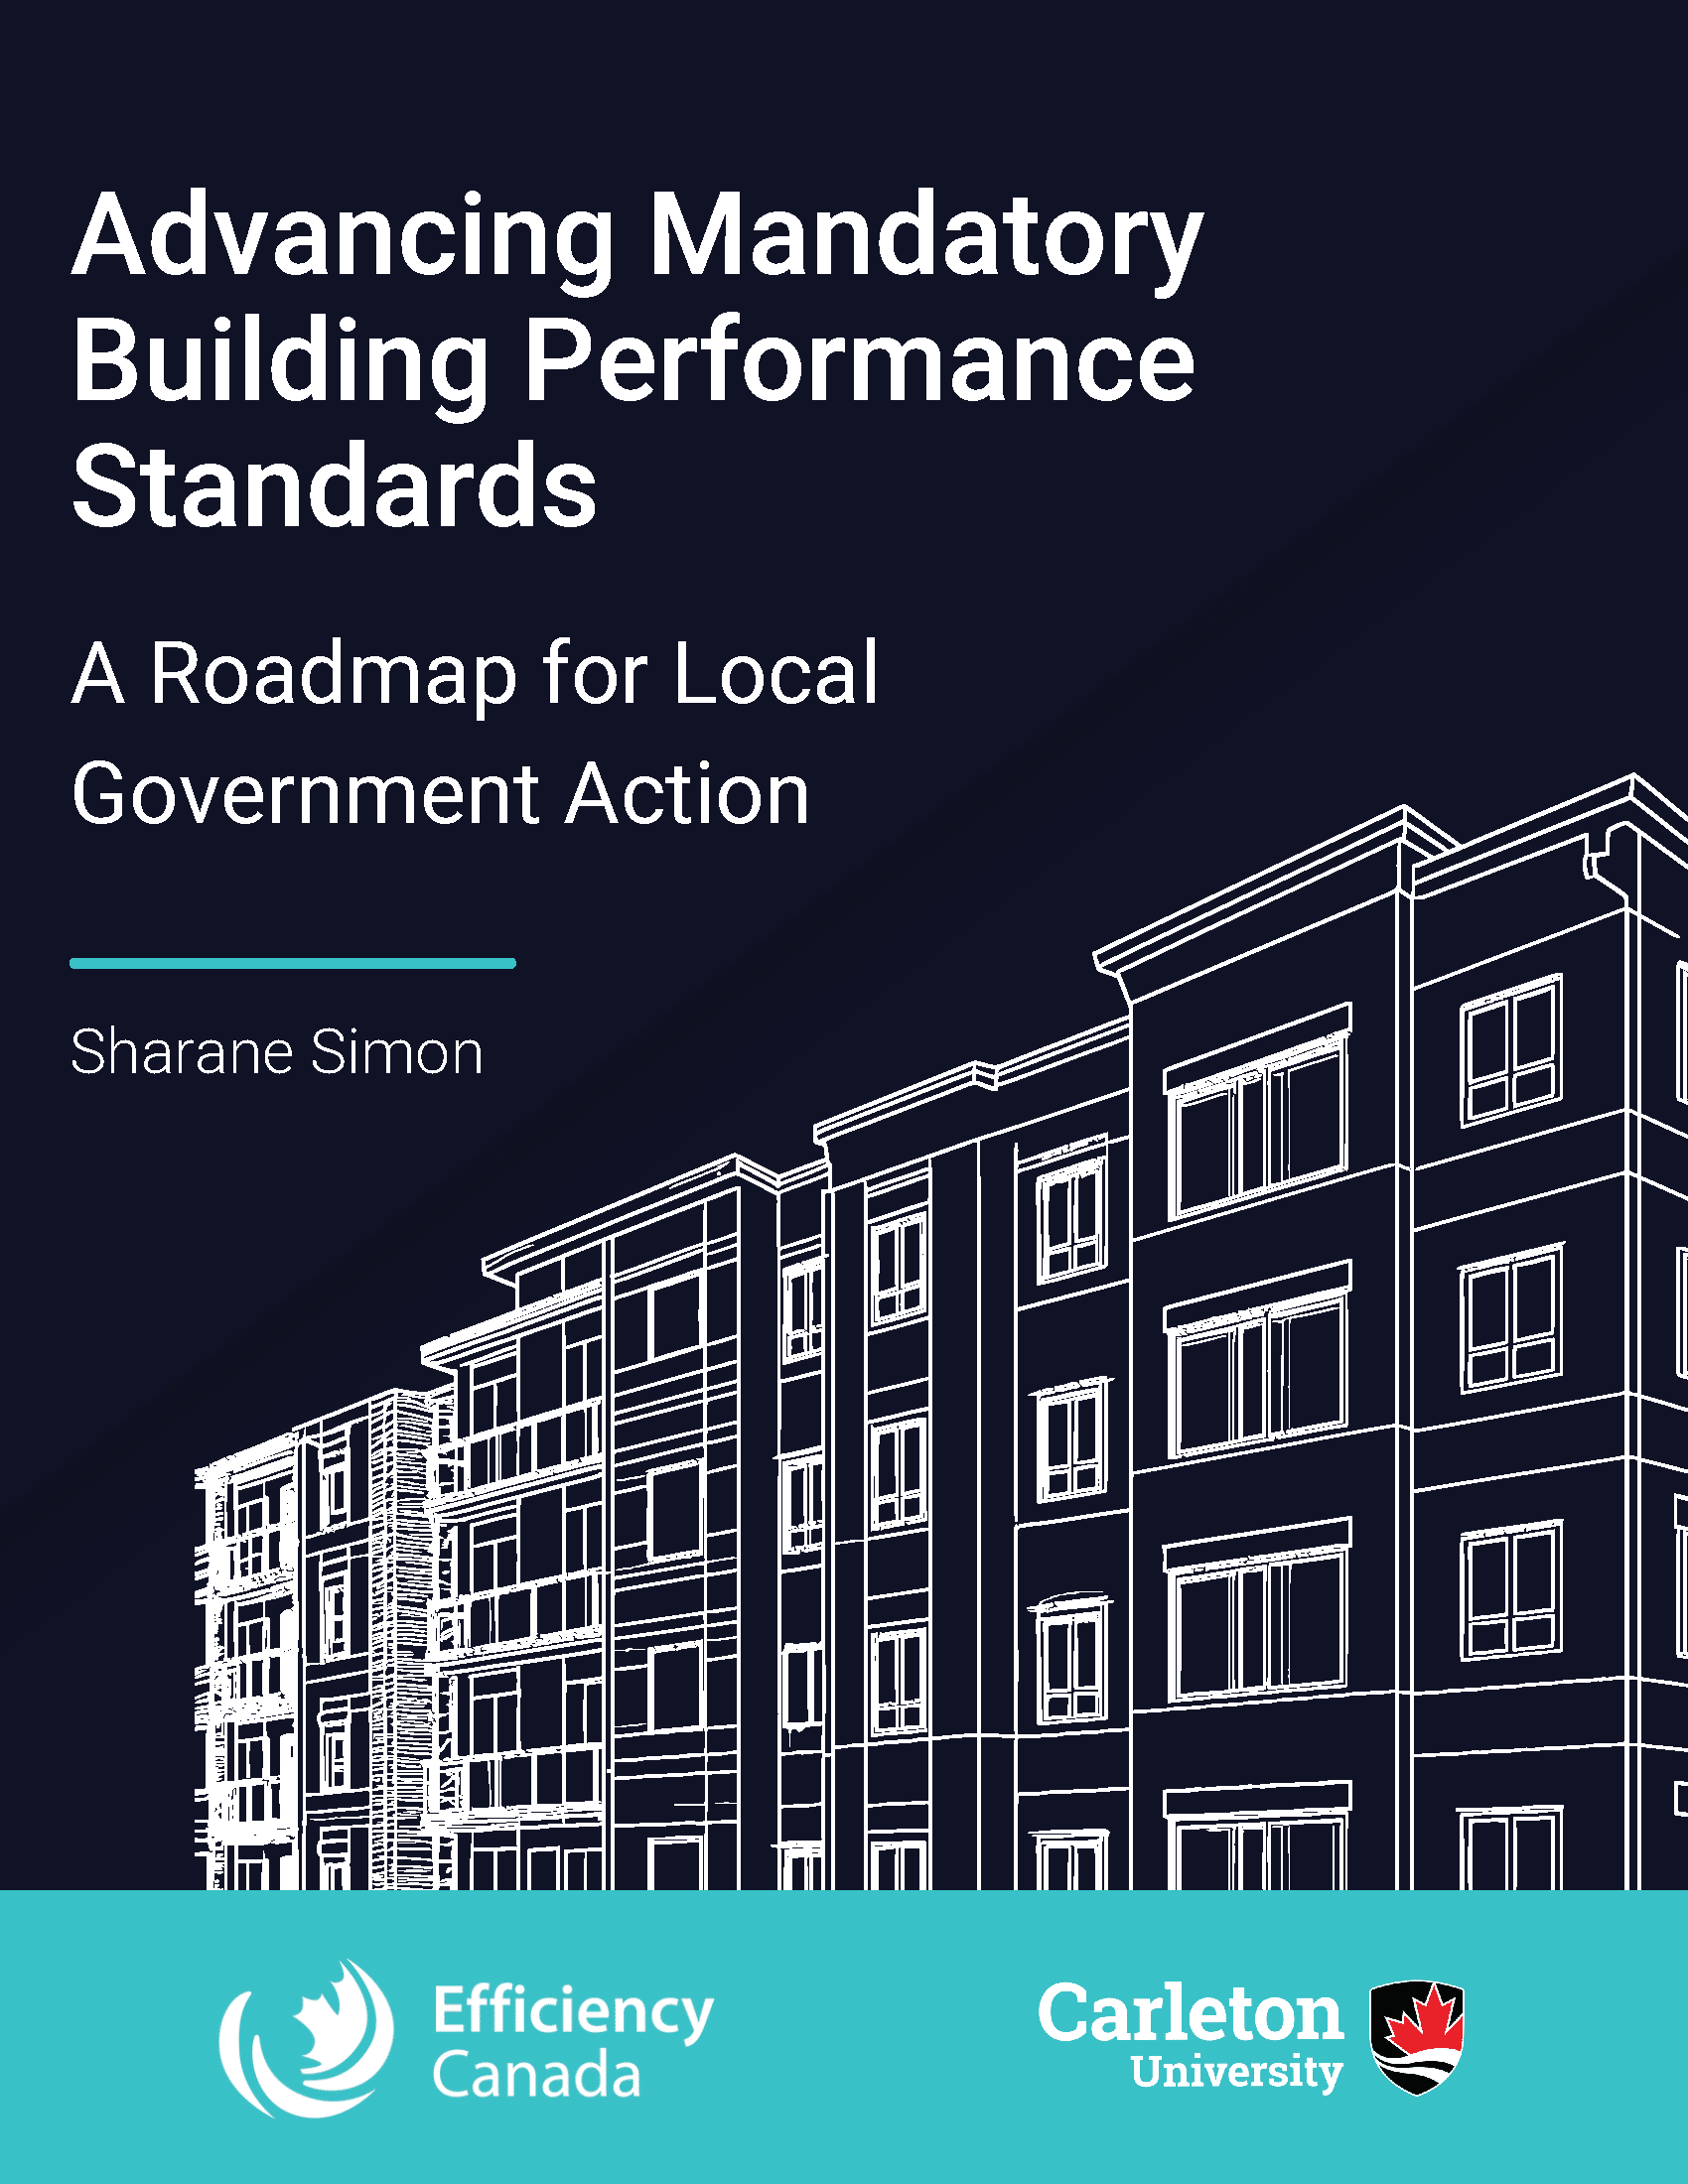 Advancing Mandatory Building Performance Standards roadmap cover